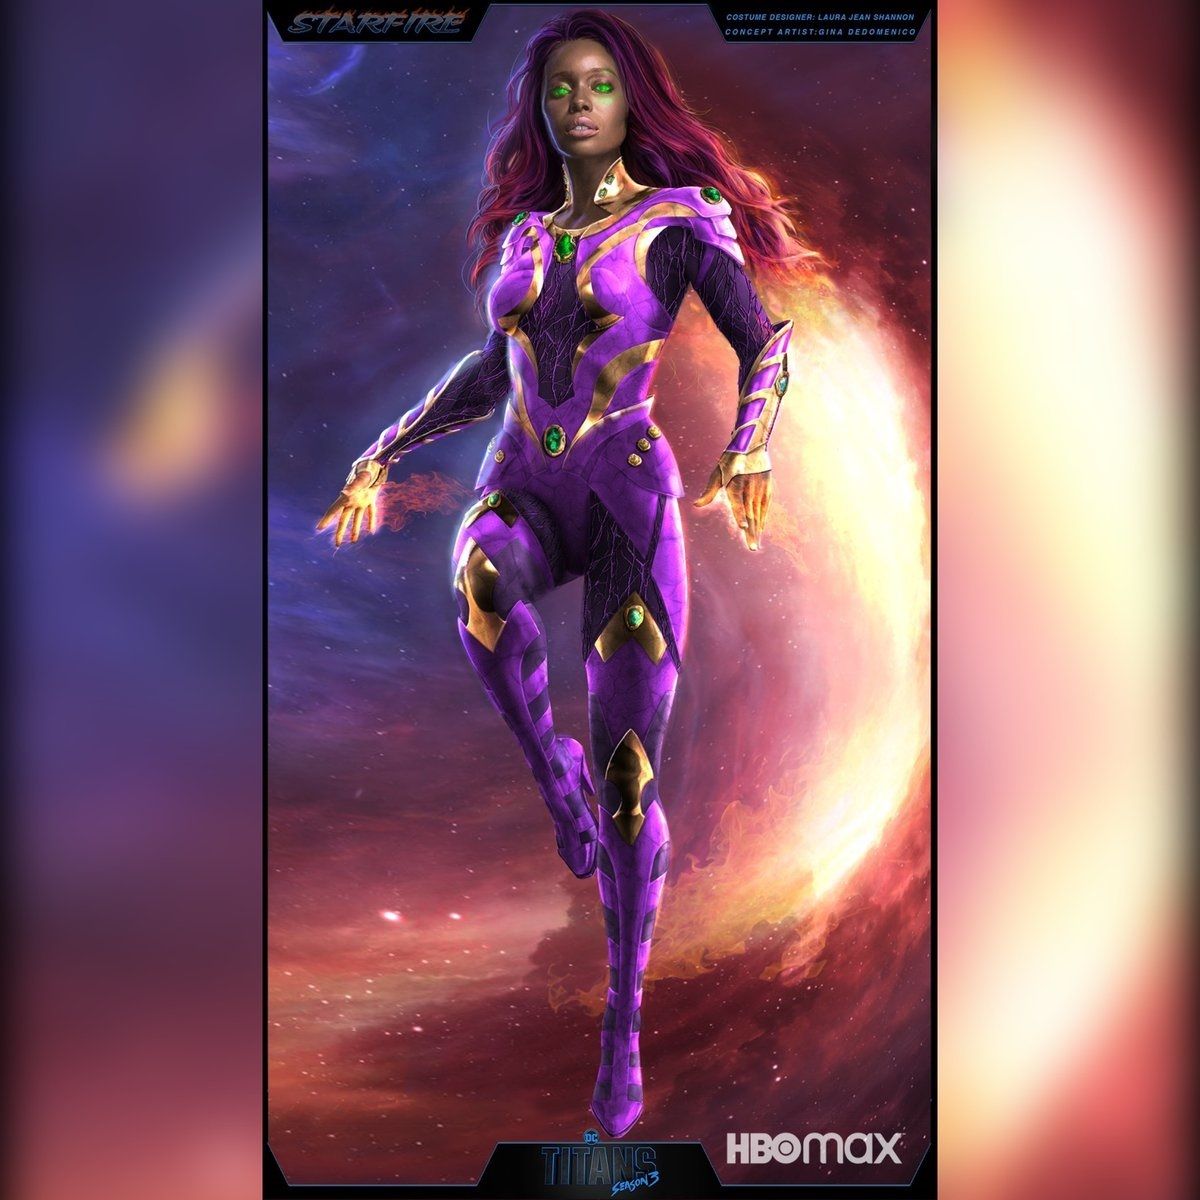 Titans Starfire Anna Diop HBO Max Suit Artwork